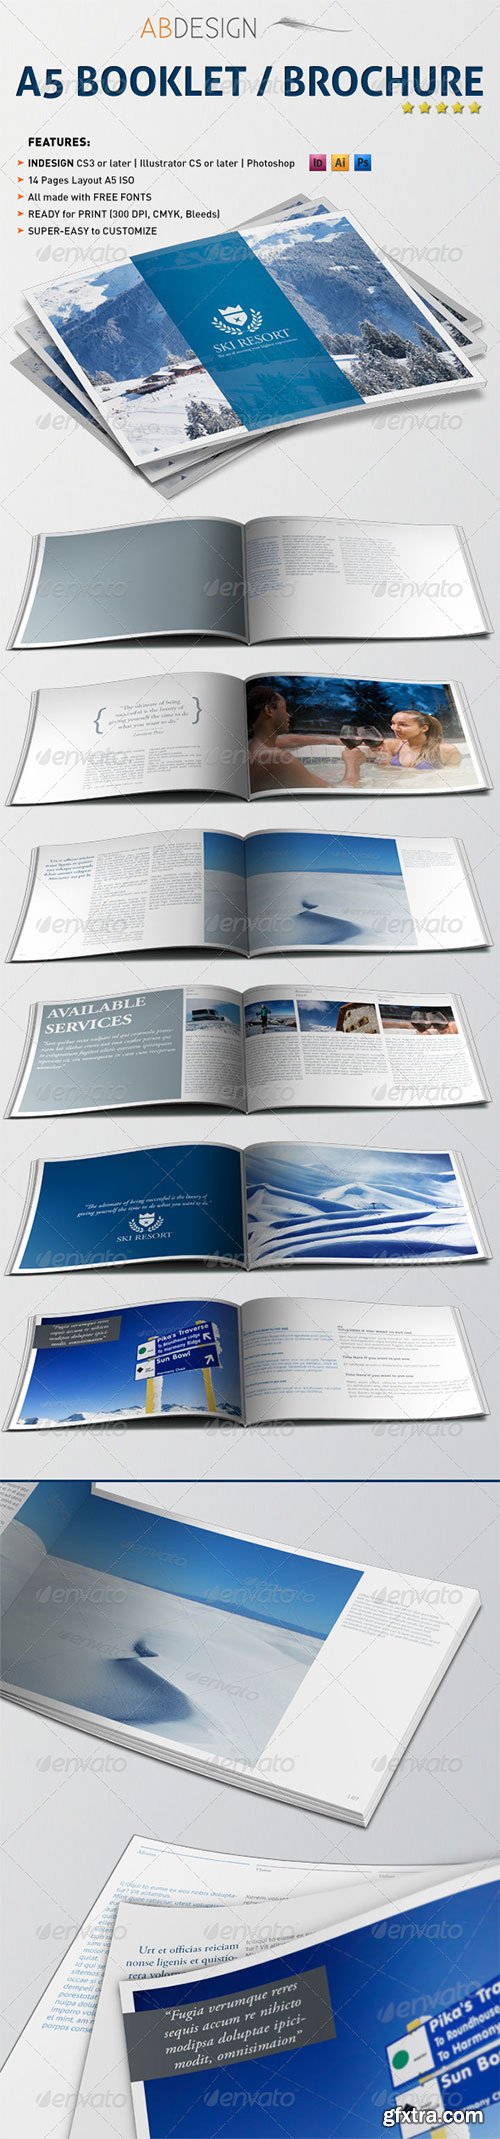 GraphicRiver - A5 Booklet Brochure 2458334